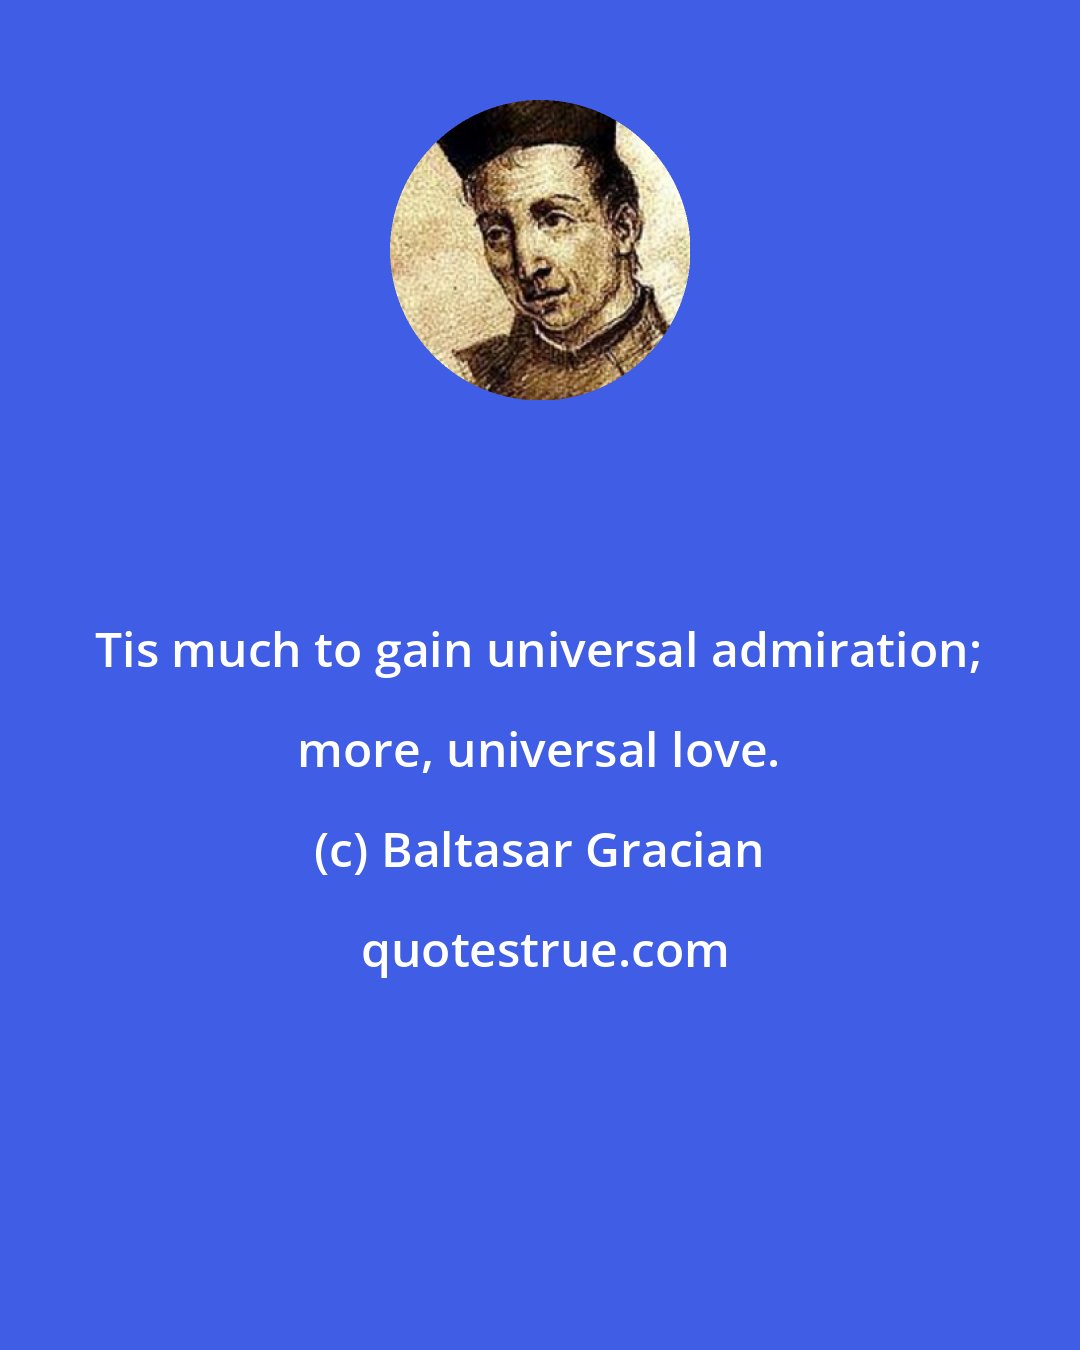 Baltasar Gracian: Tis much to gain universal admiration; more, universal love.